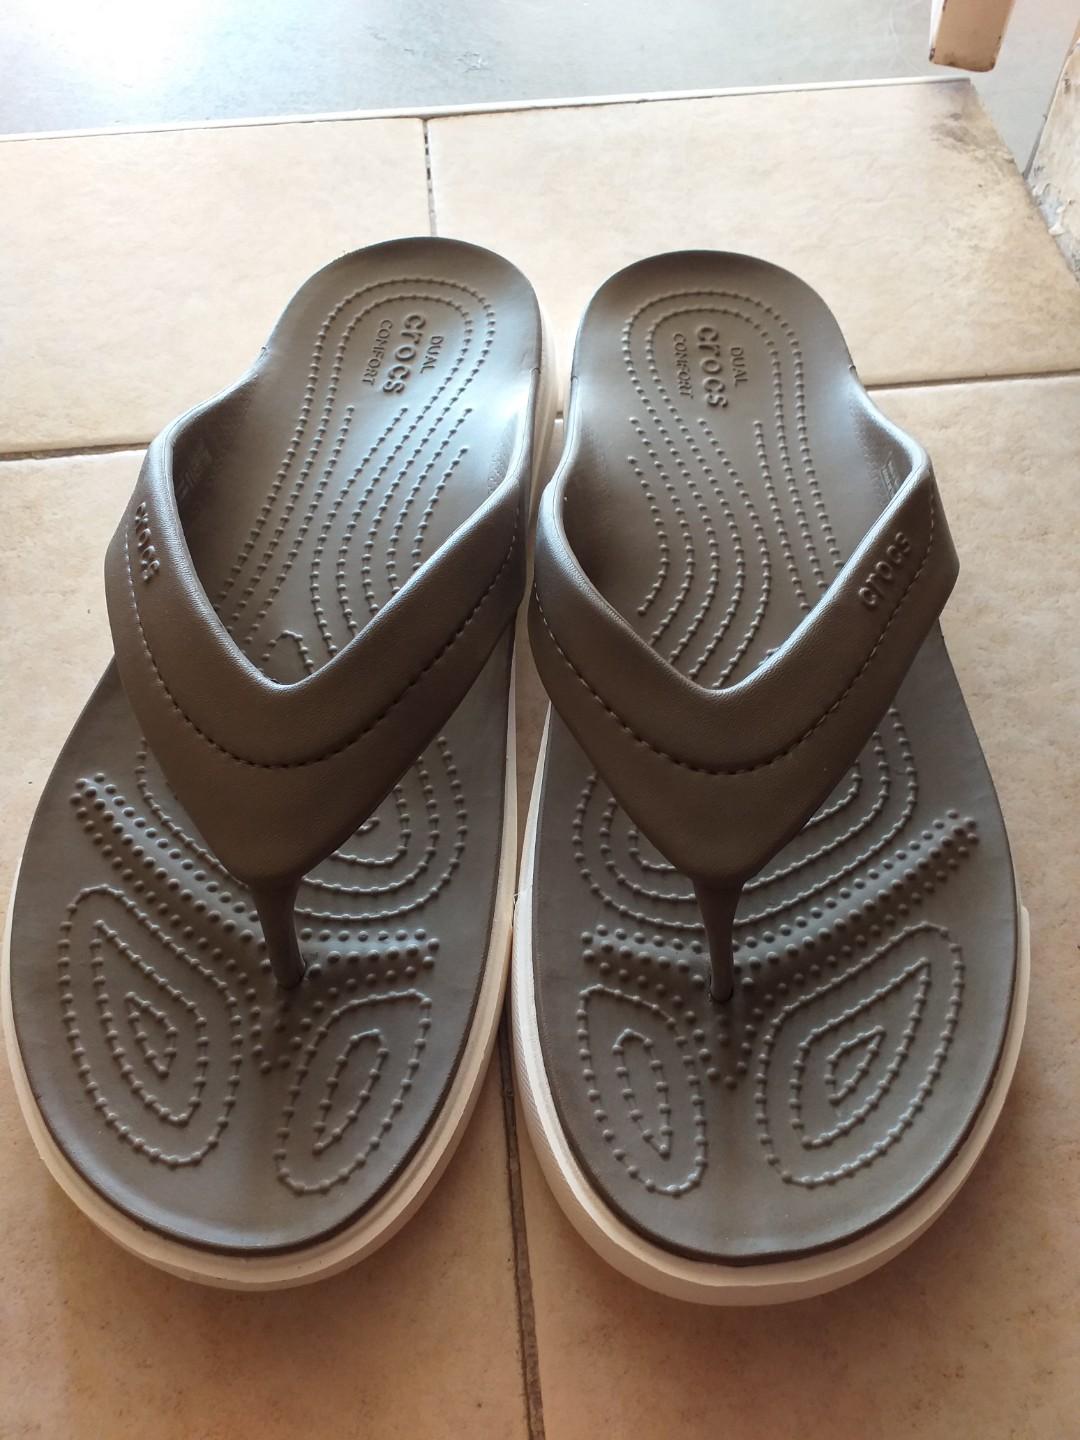 croc slippers